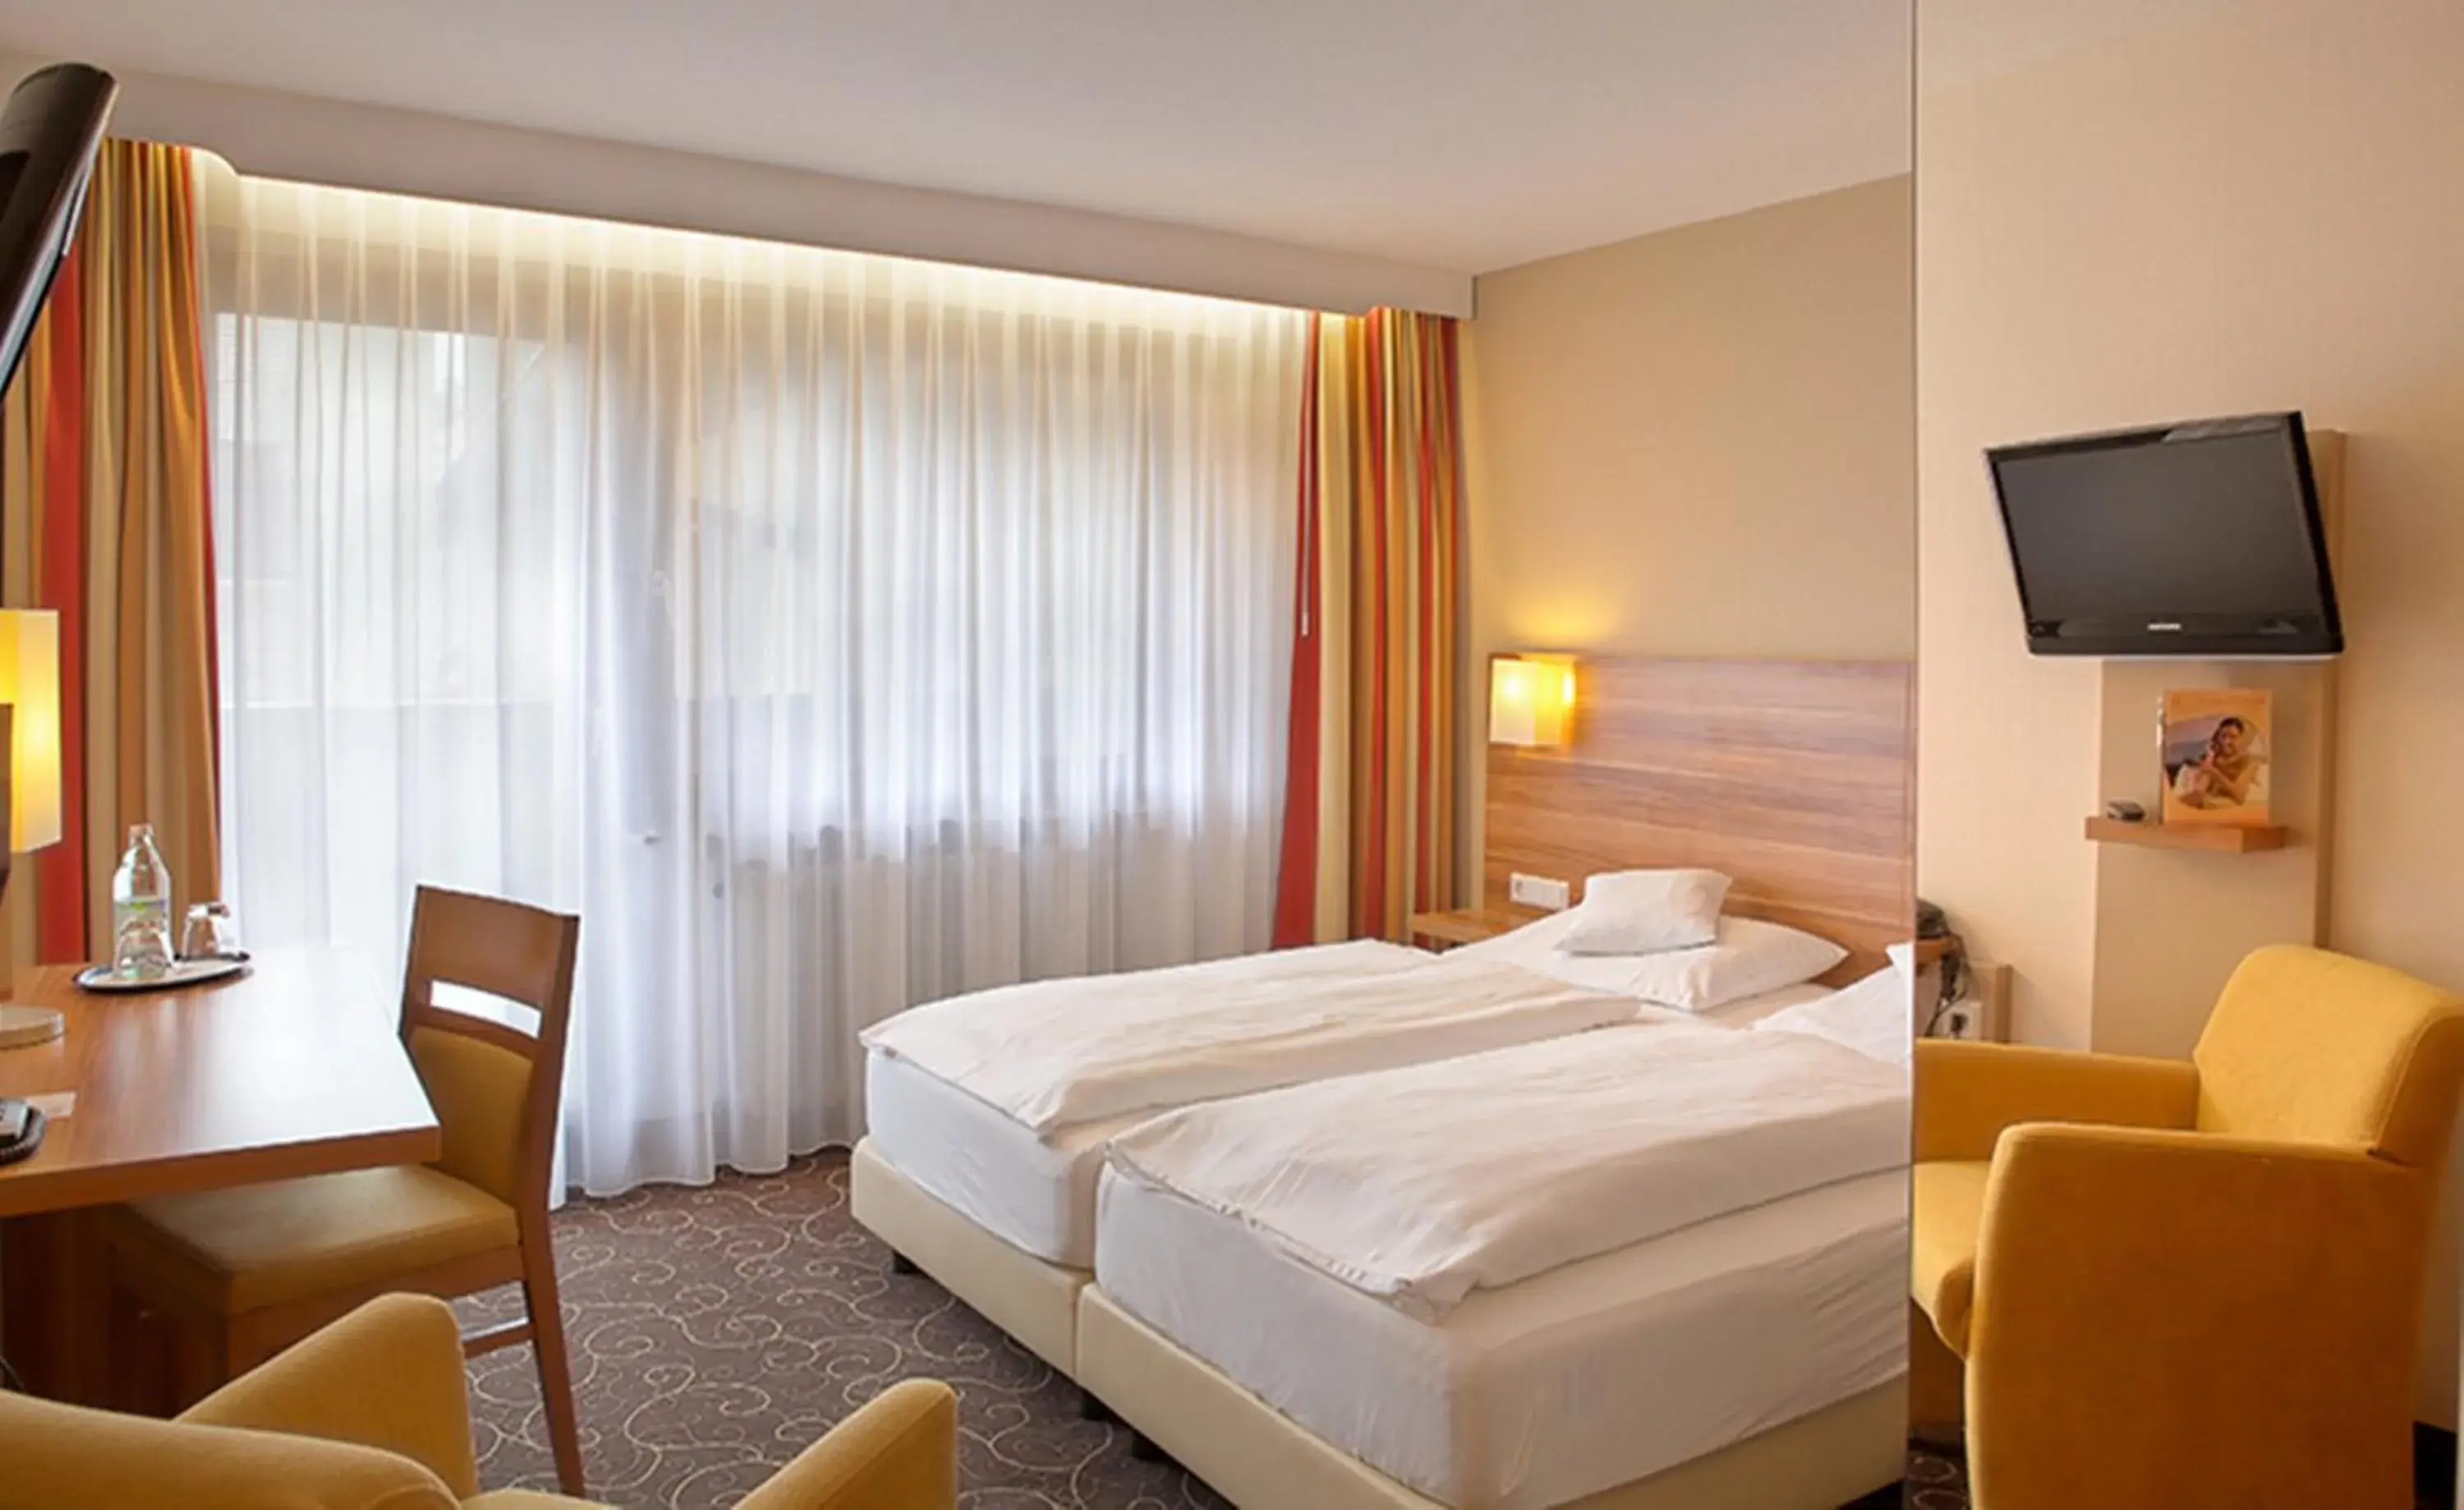 Standard Double Room - single occupancy in Flair Hotel Weinstube Lochner